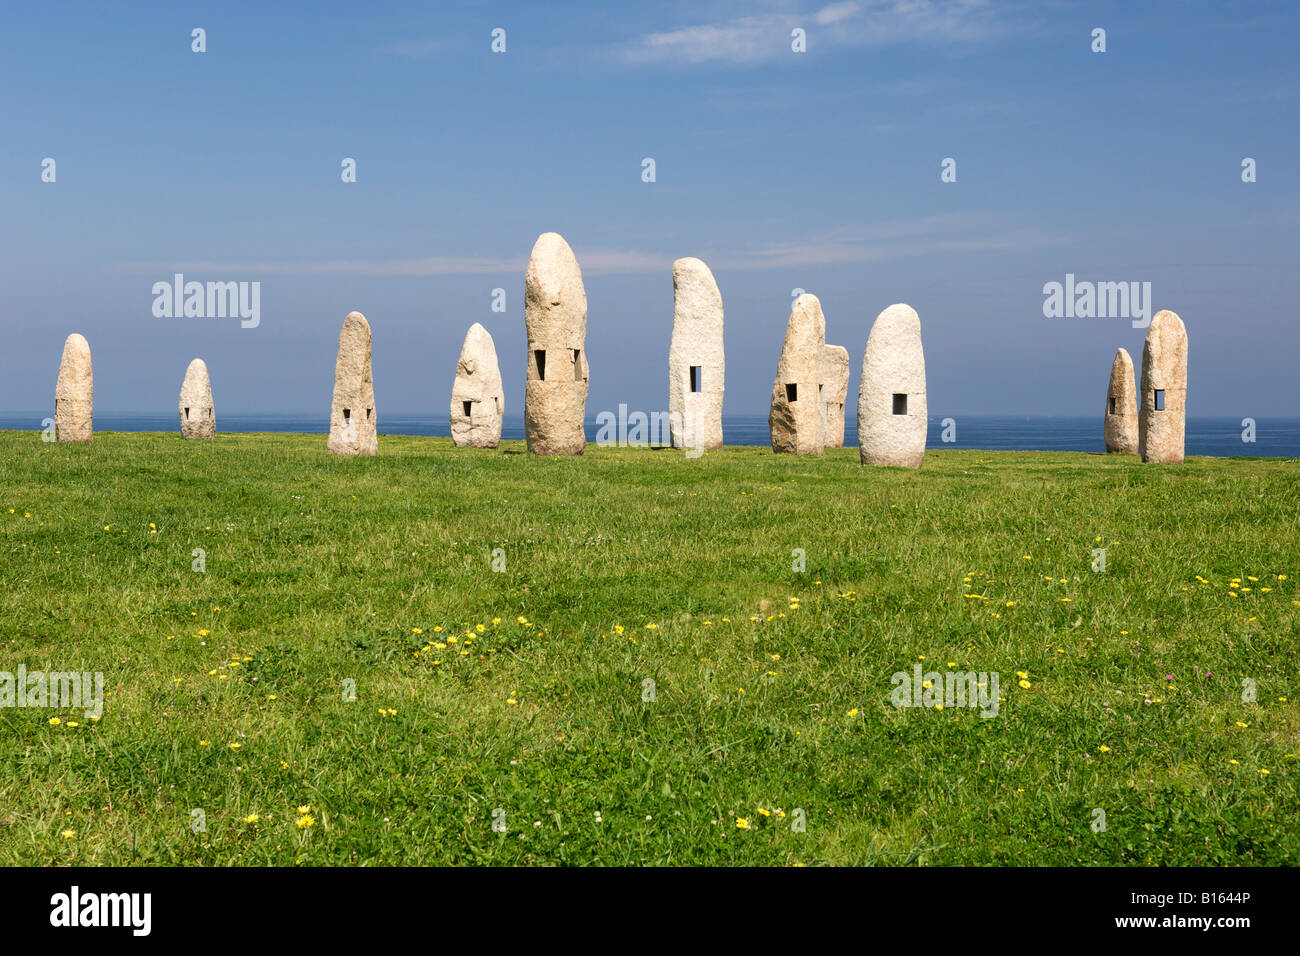 Menhir sculptures of Manuel Paz in the town of La Coruña in Spain's Galicia region. Stock Photo